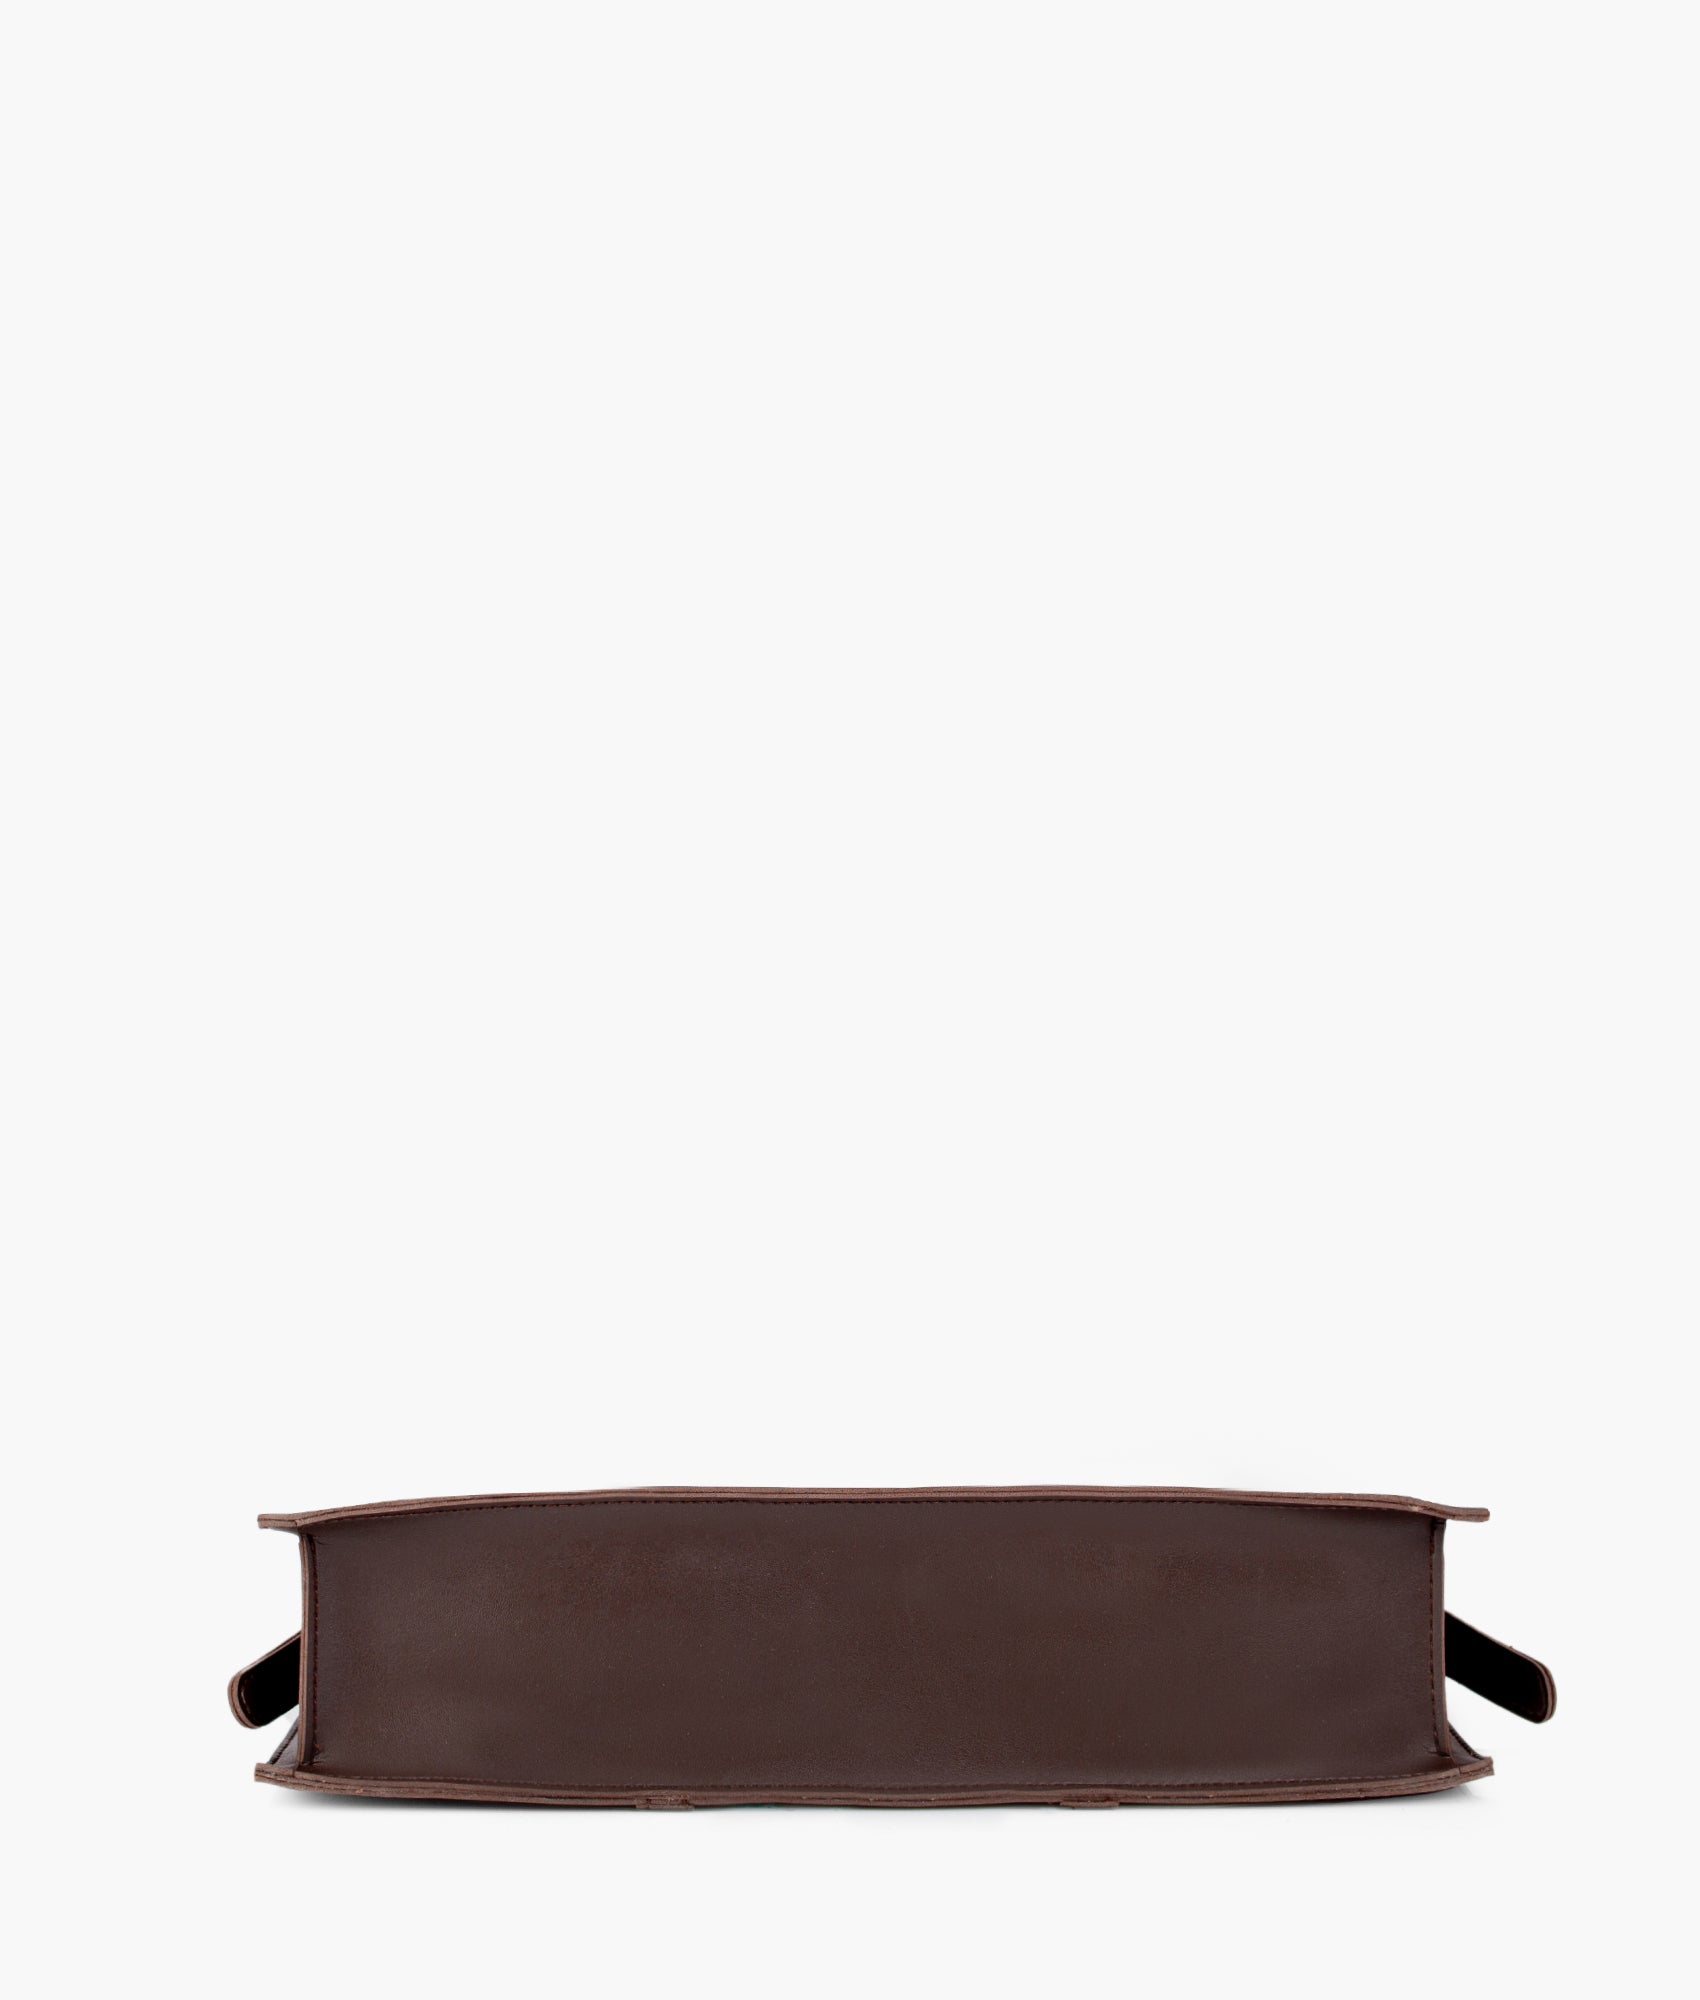 Dark brown laptop bag